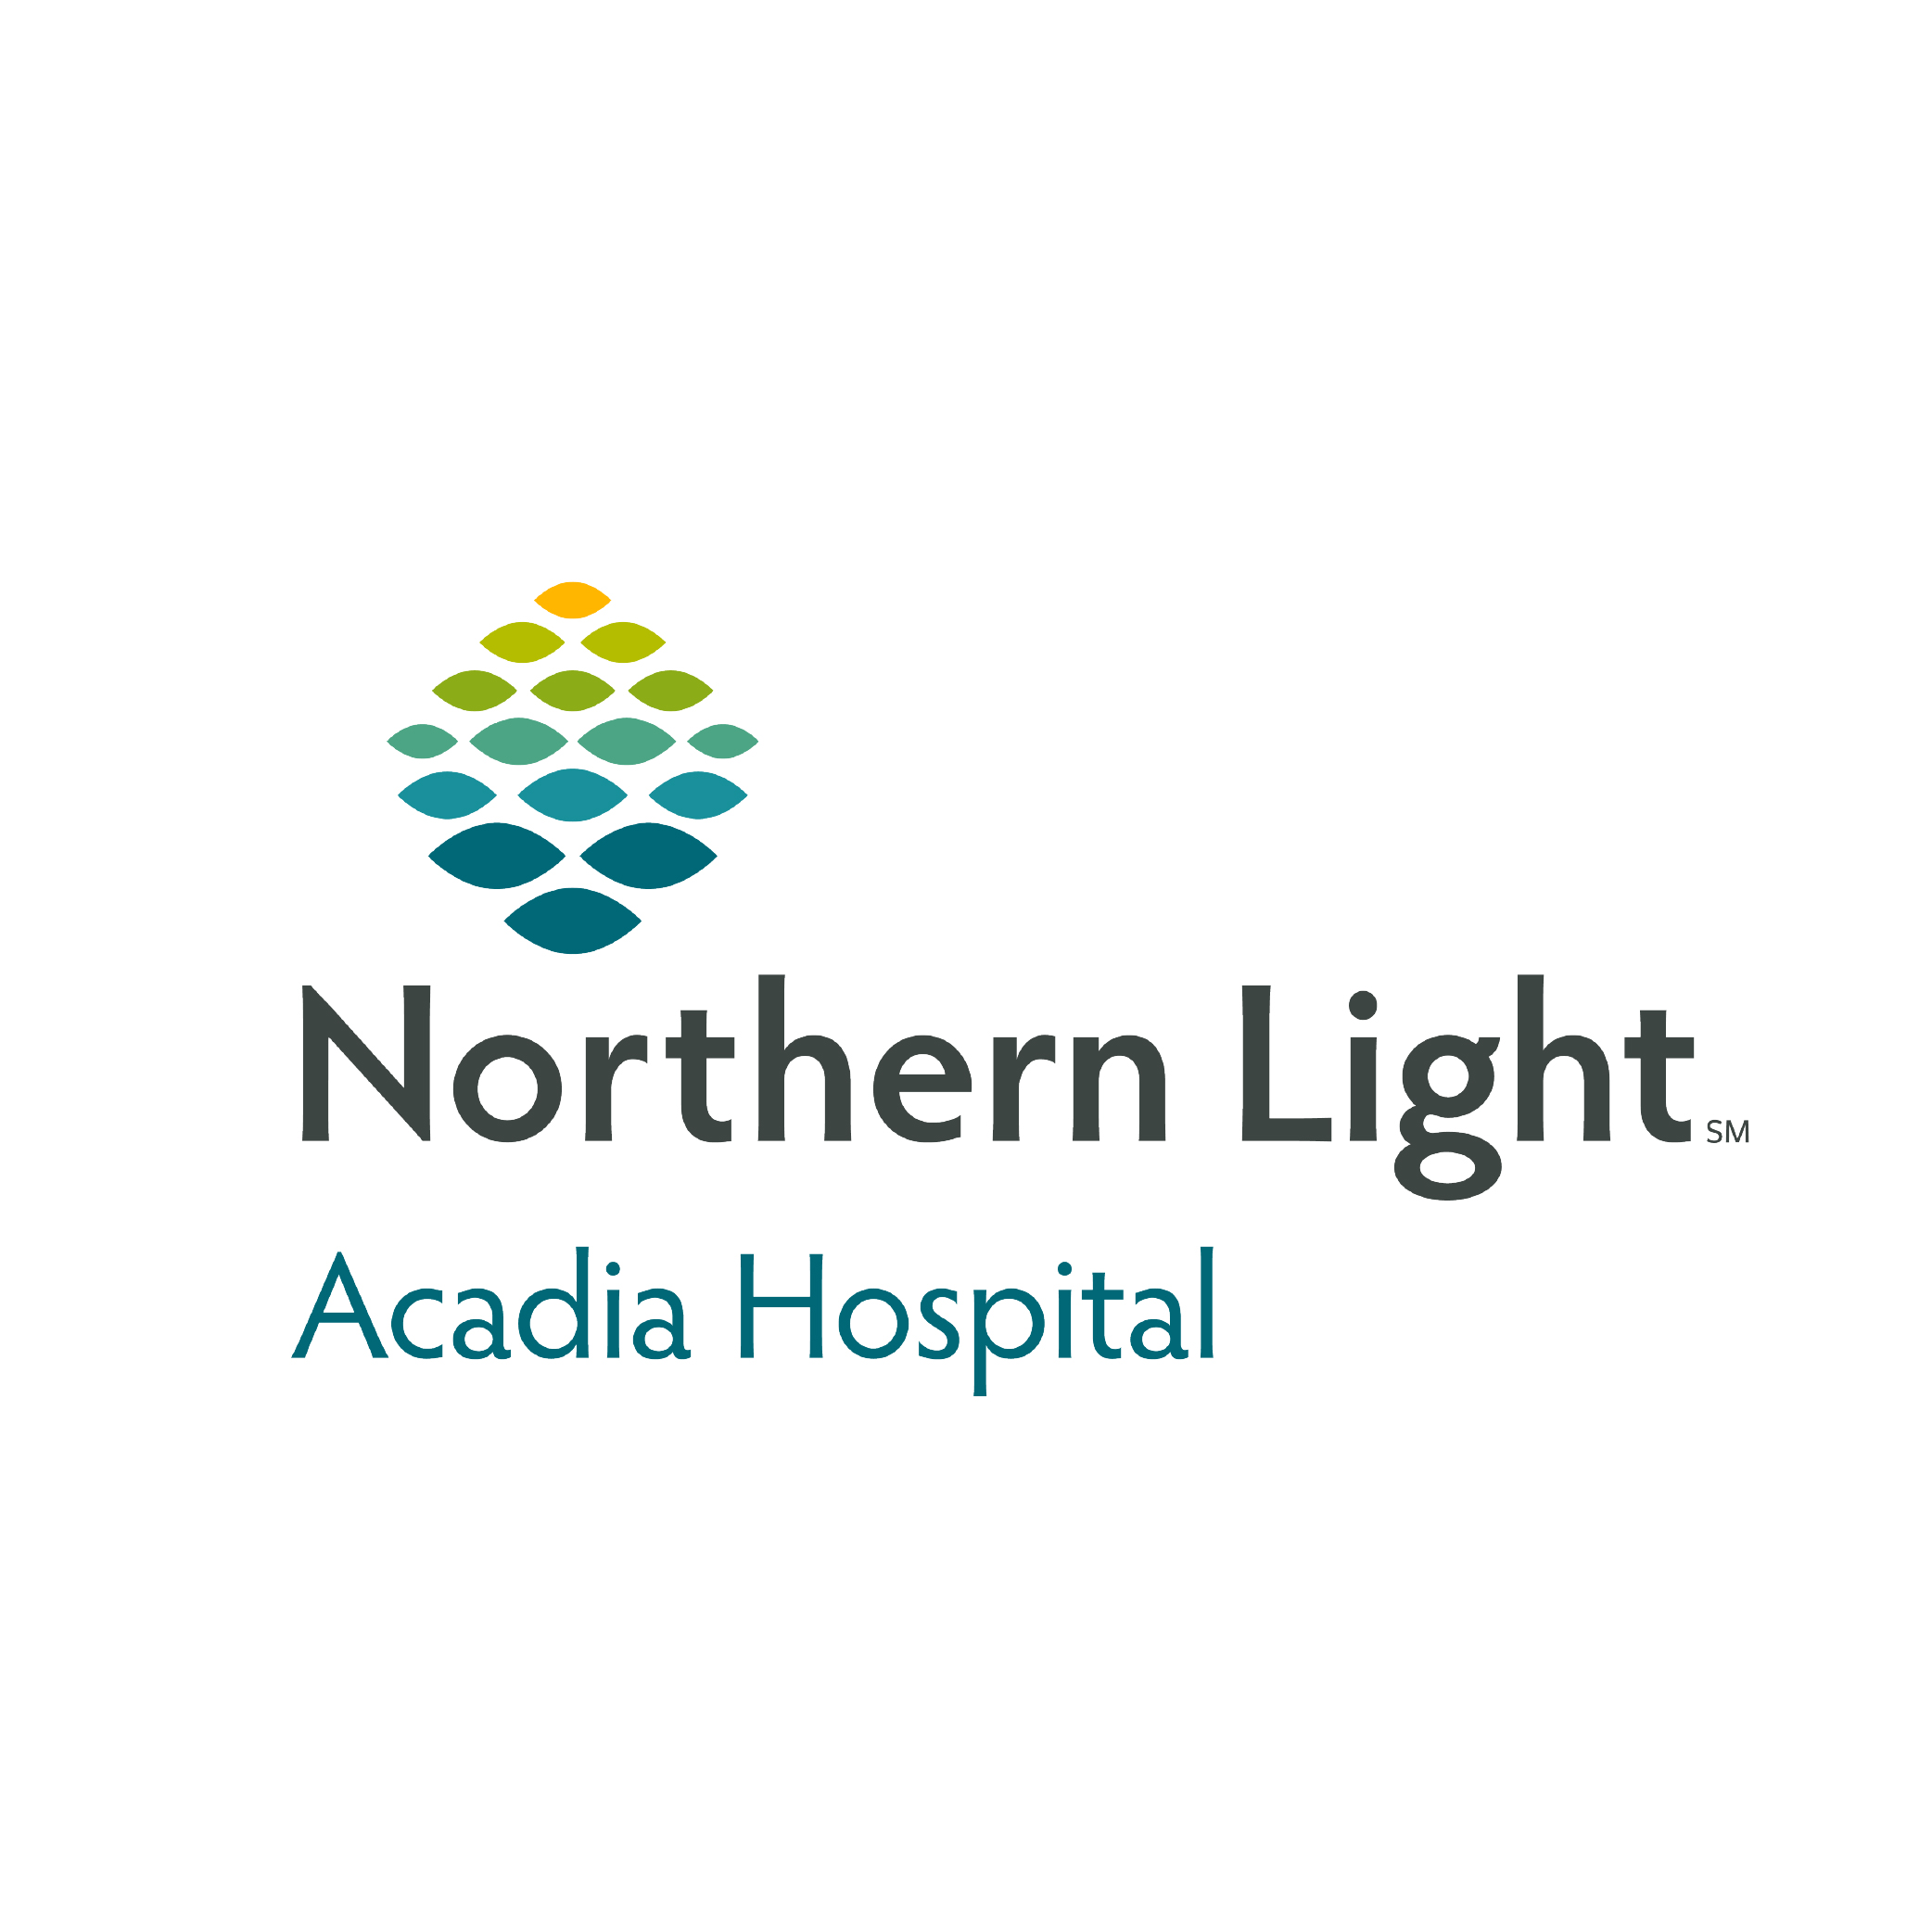 Northern Light Acadia Hospital logo